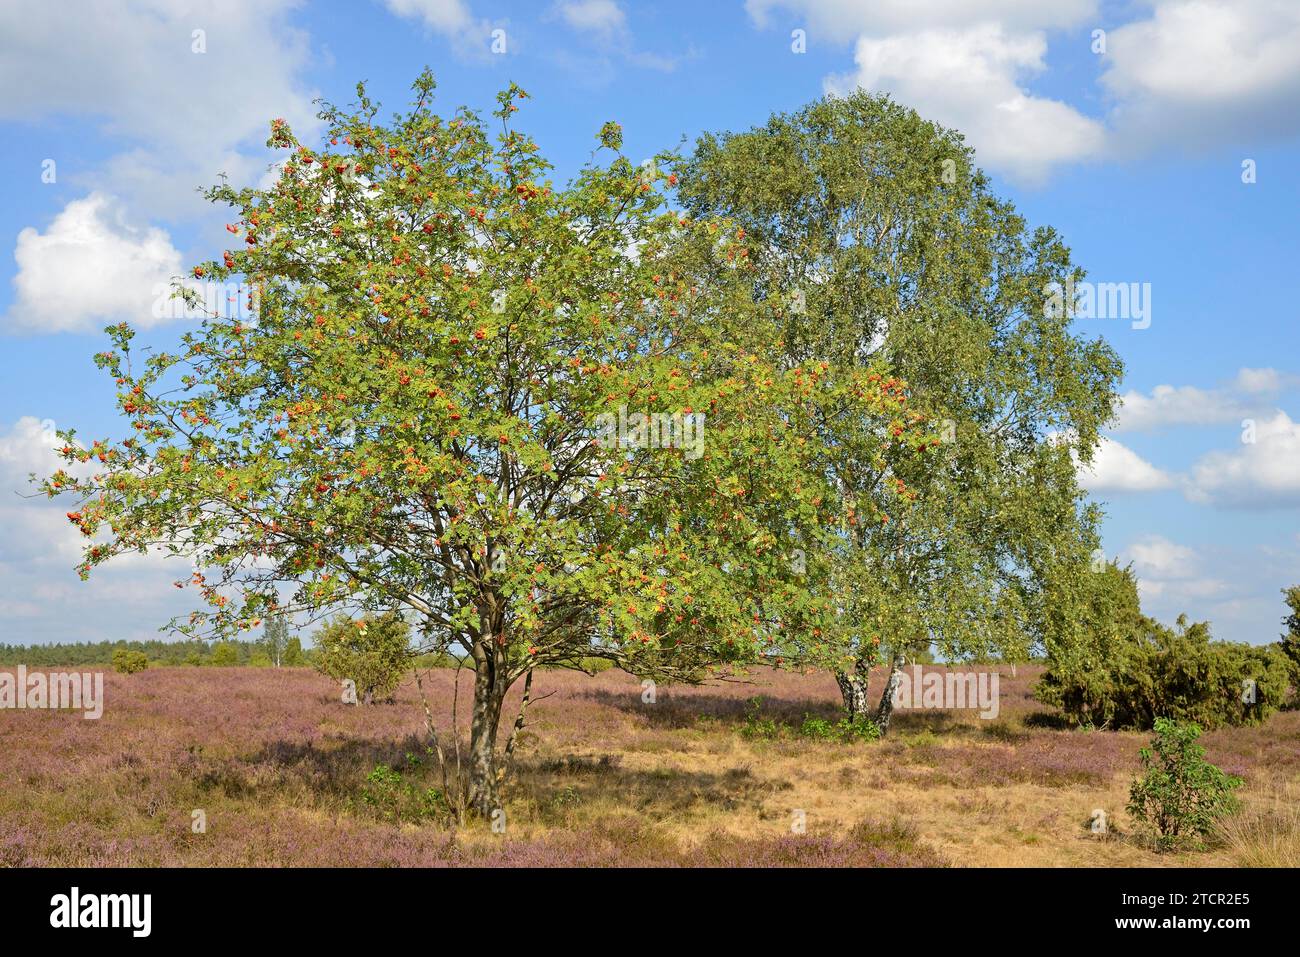 Heath landscape, typical vegetation, european rowan (Sorbus aucuparia) with red fruits, birch (Betula) and juniper (Juniperus communis) in the Stock Photo